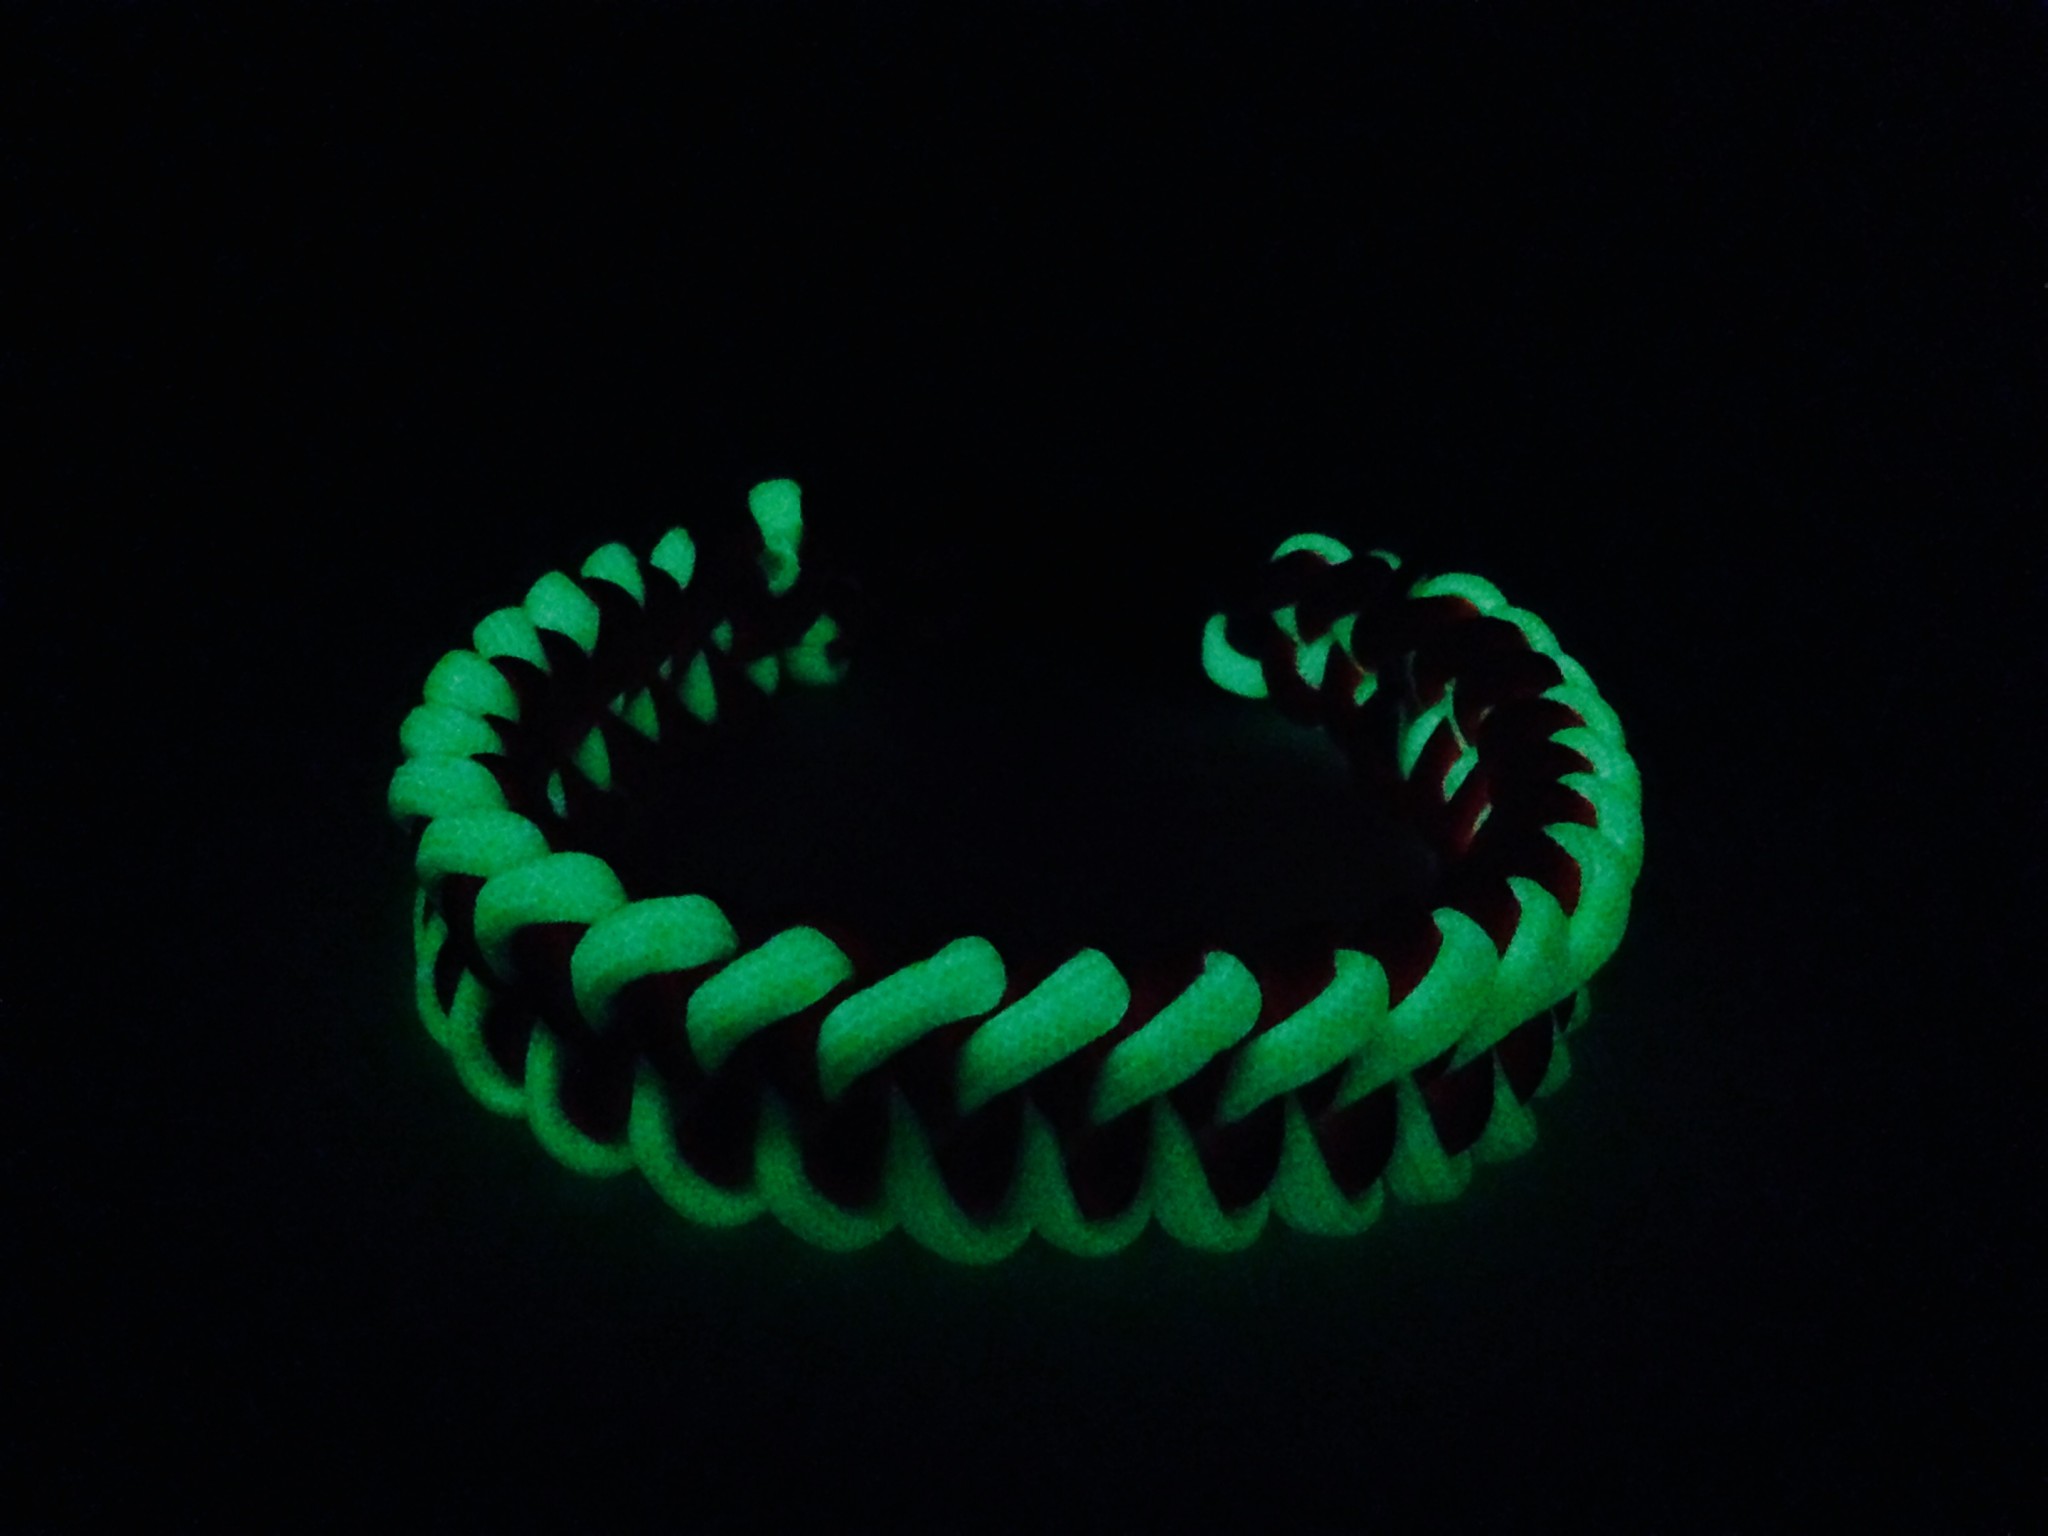 glow in the dark puppy collars